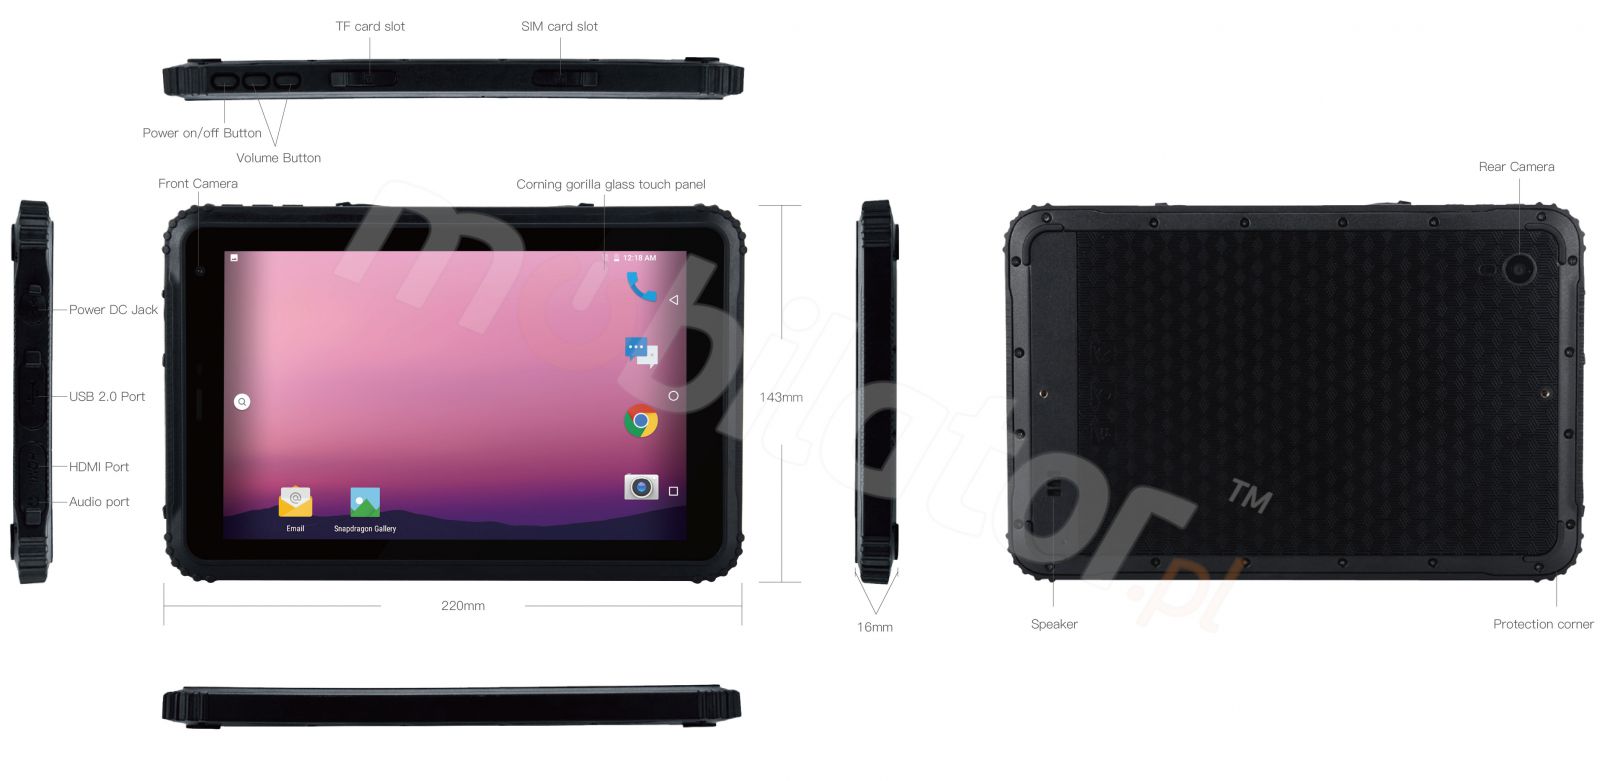 Wytrzymay tablet (IP67 + MIL-STD-810G), 4GB RAM pamici, dysk 64GB, BT 4.1, NFC, AR Film i 4G - Emdoor Q88 v.2